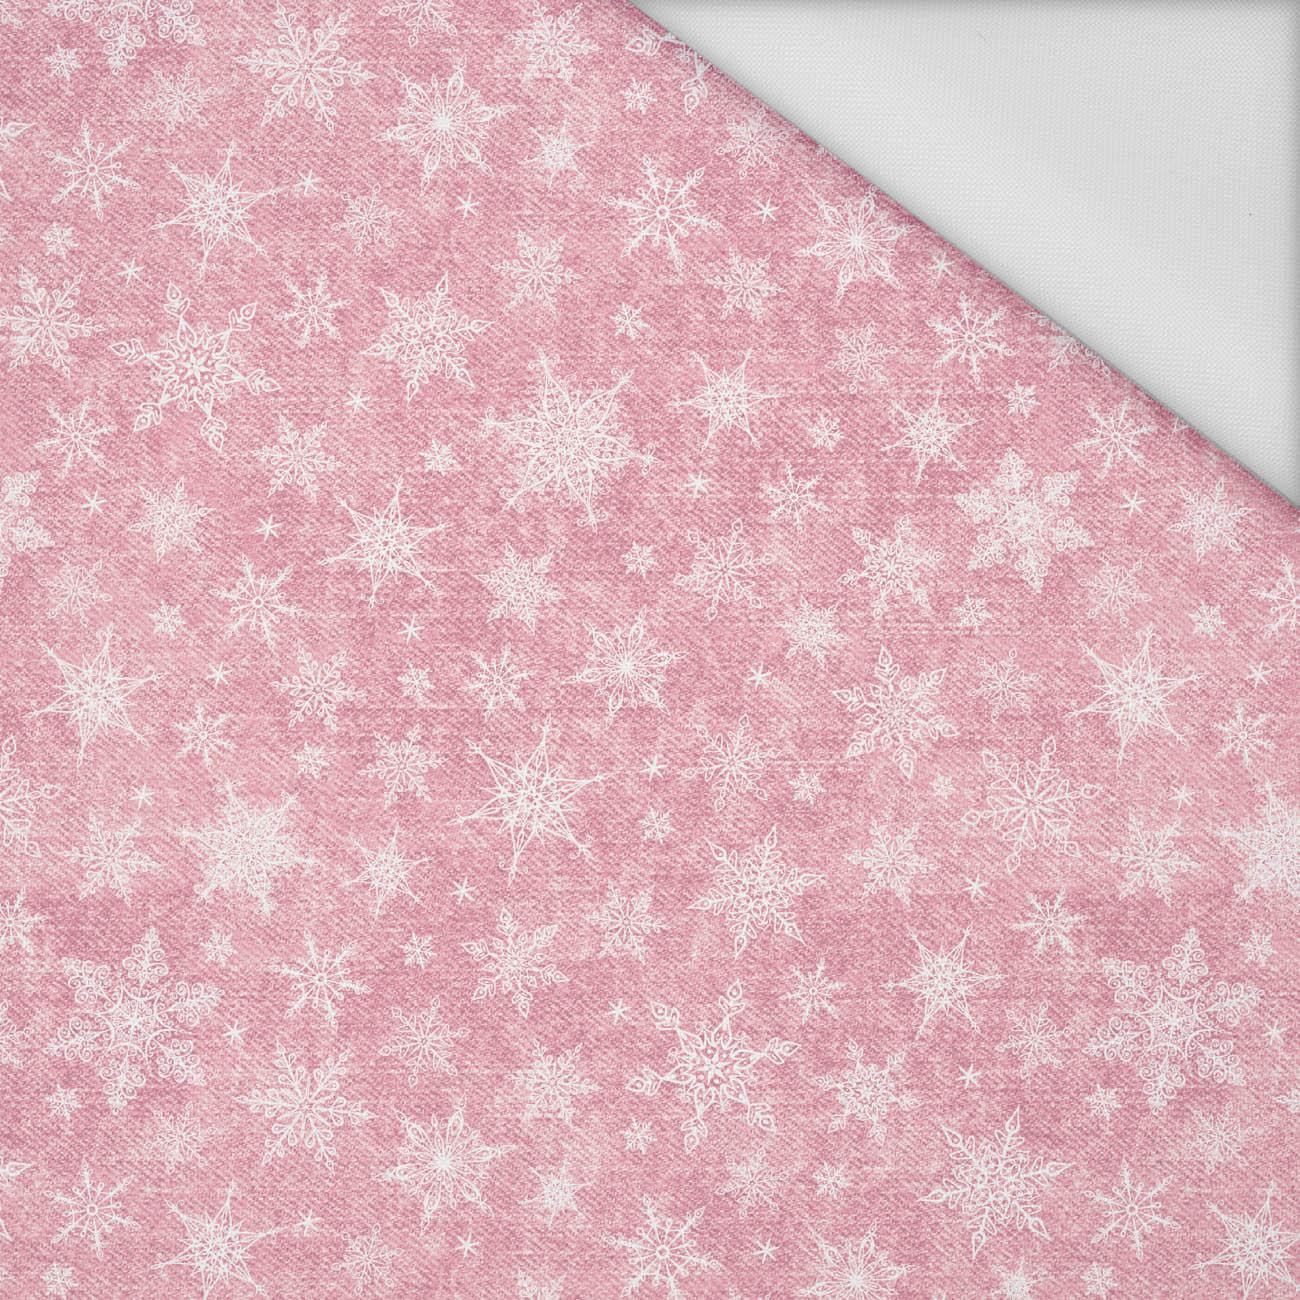 SNOWFLAKES PAT. 2 / ACID WASH ROSE QUARTZ - Waterproof woven fabric